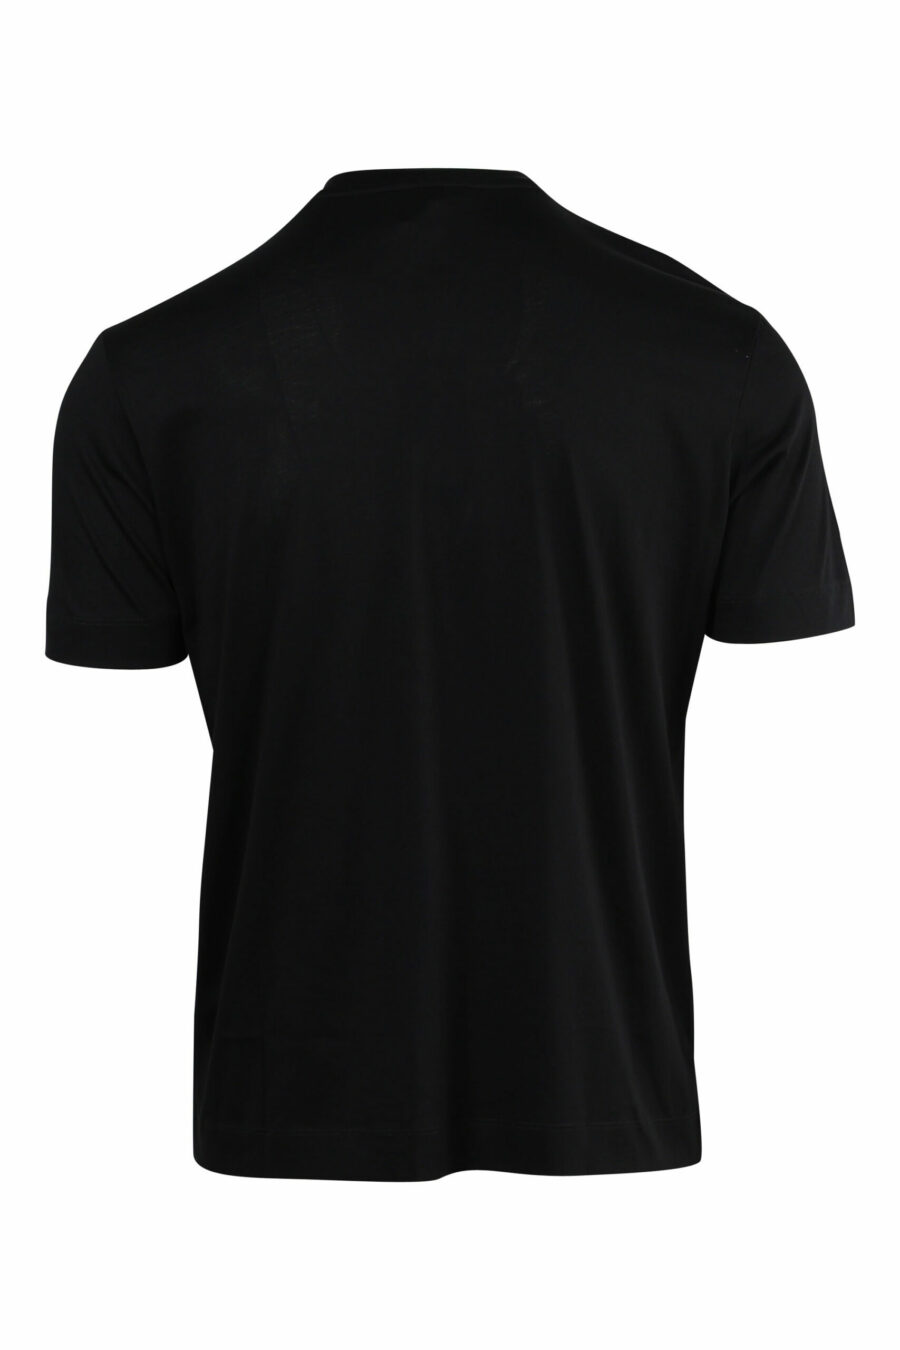 T-shirt noir avec maxilogo aigle embossé - 8057970433729 1 scaled